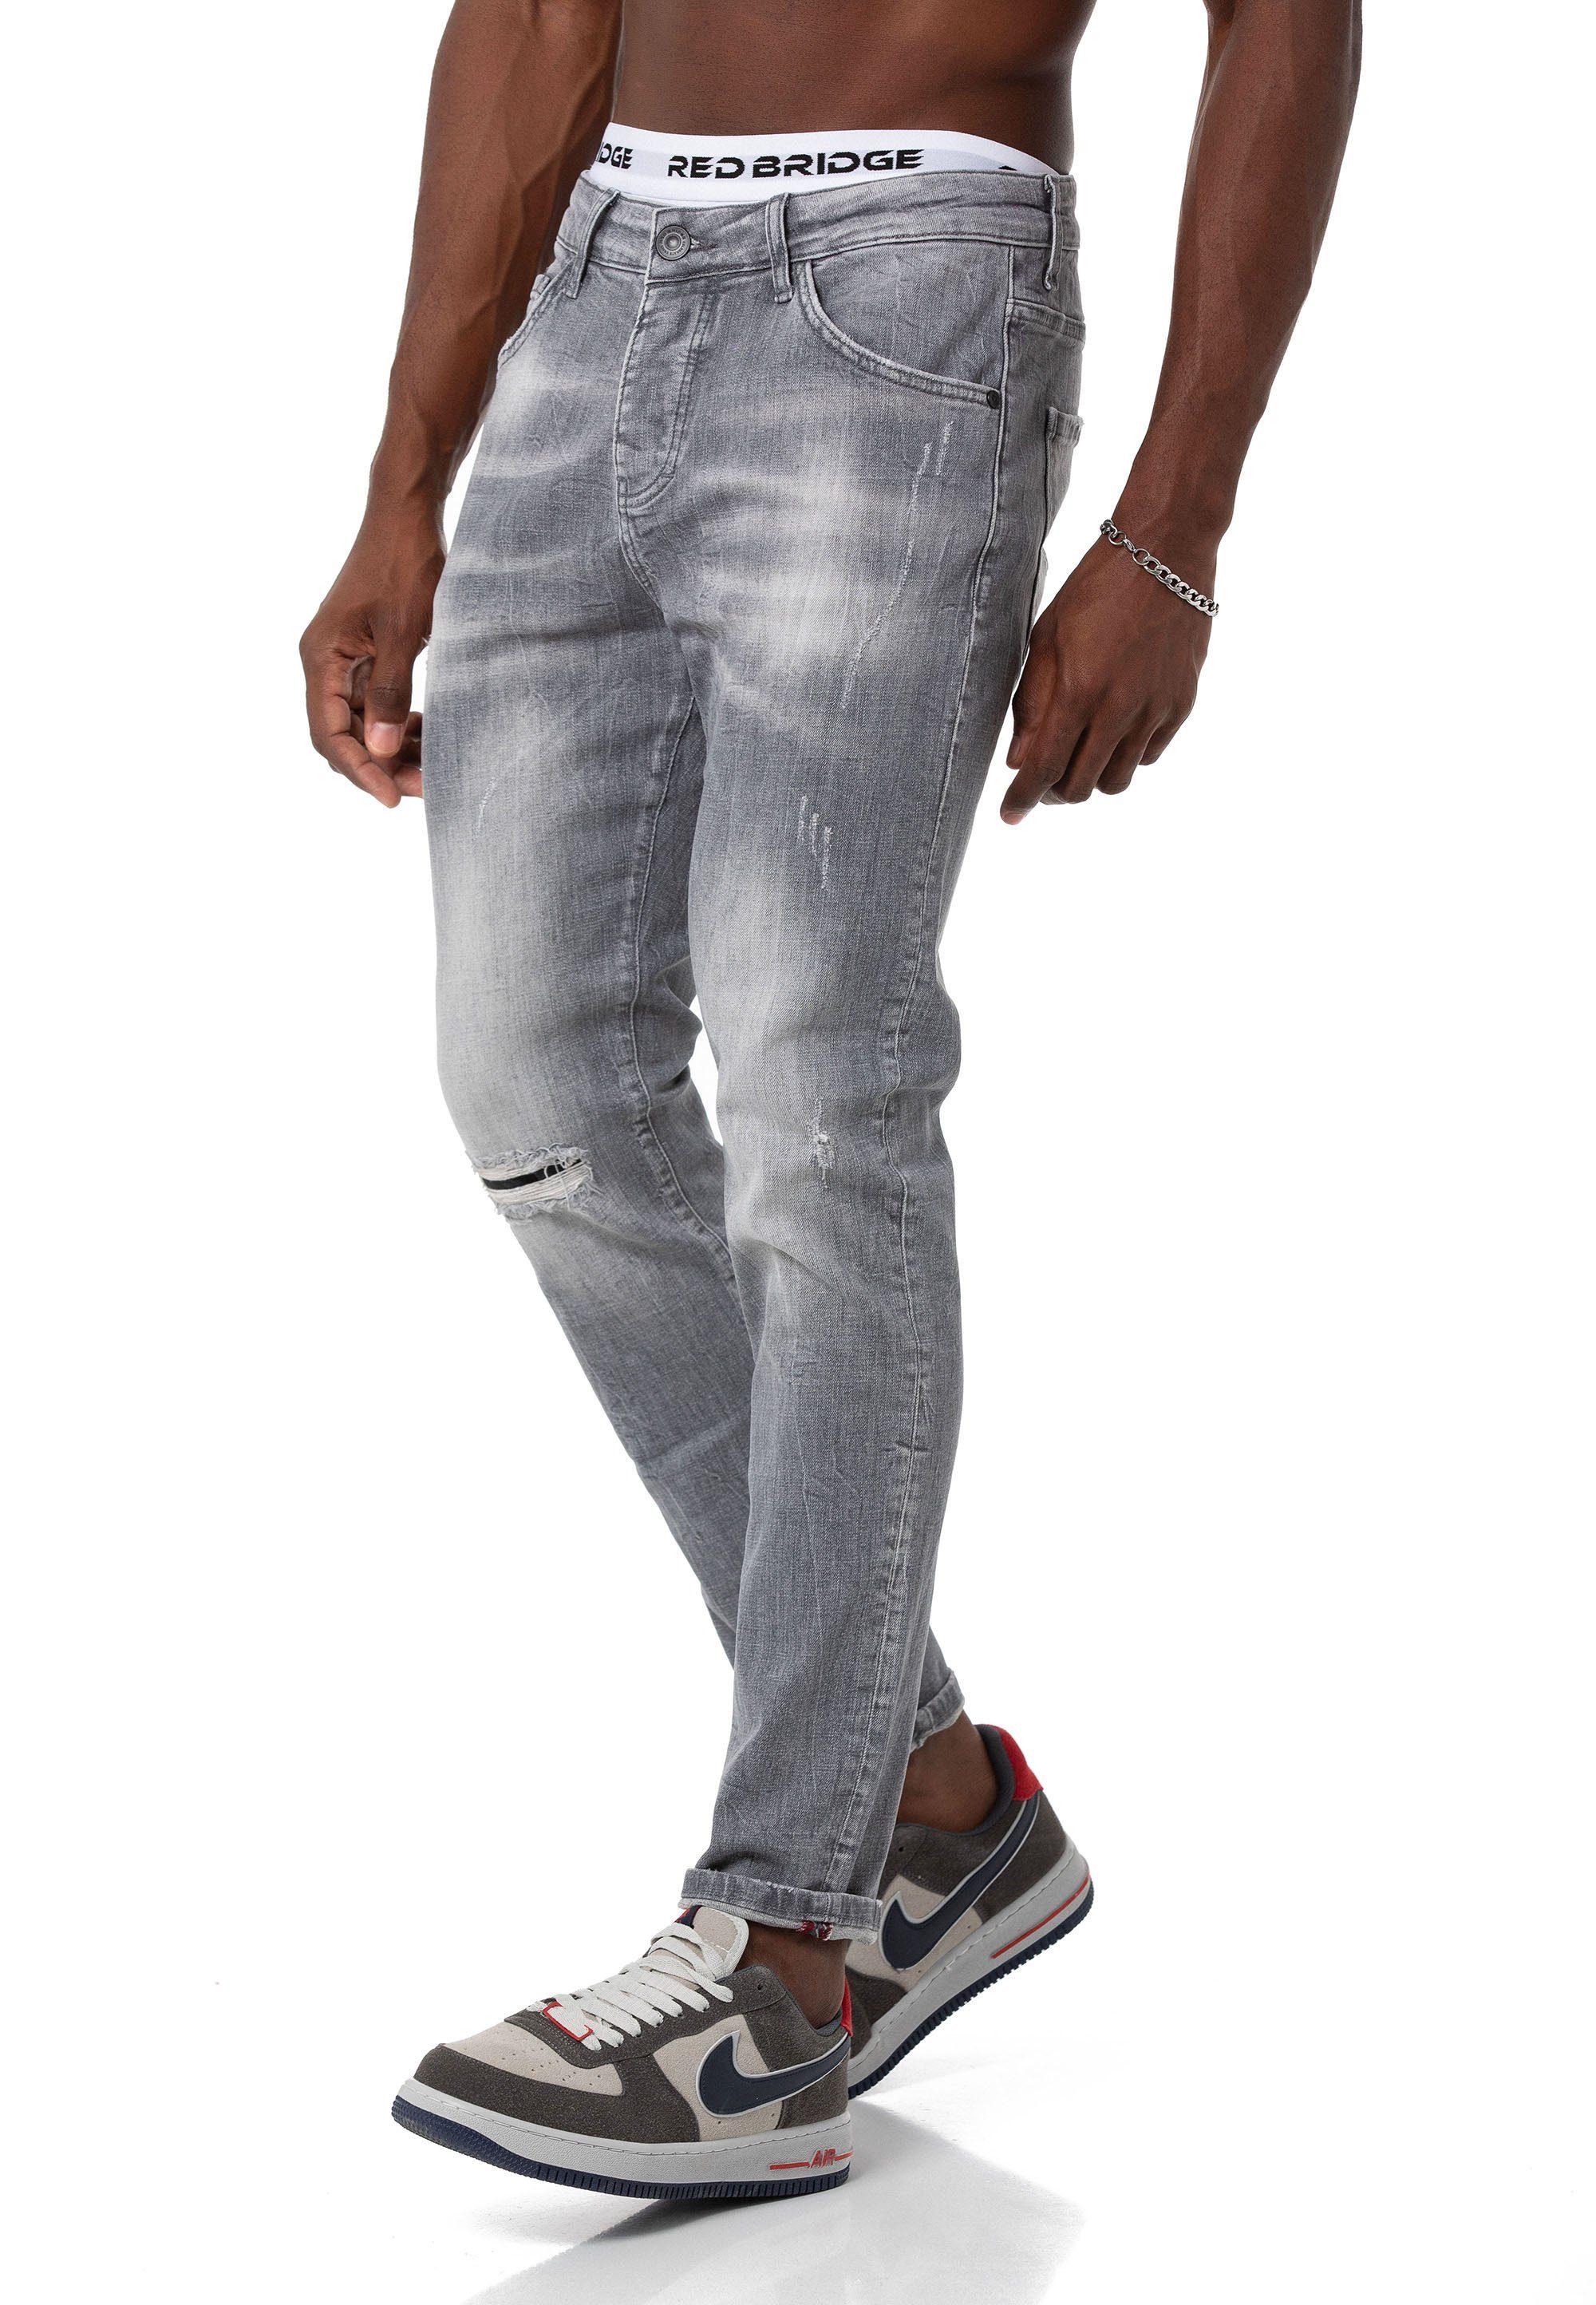 RedBridge Slim-fit-Jeans Hose Straight Leg Denim Pants Distressed-Look Grau